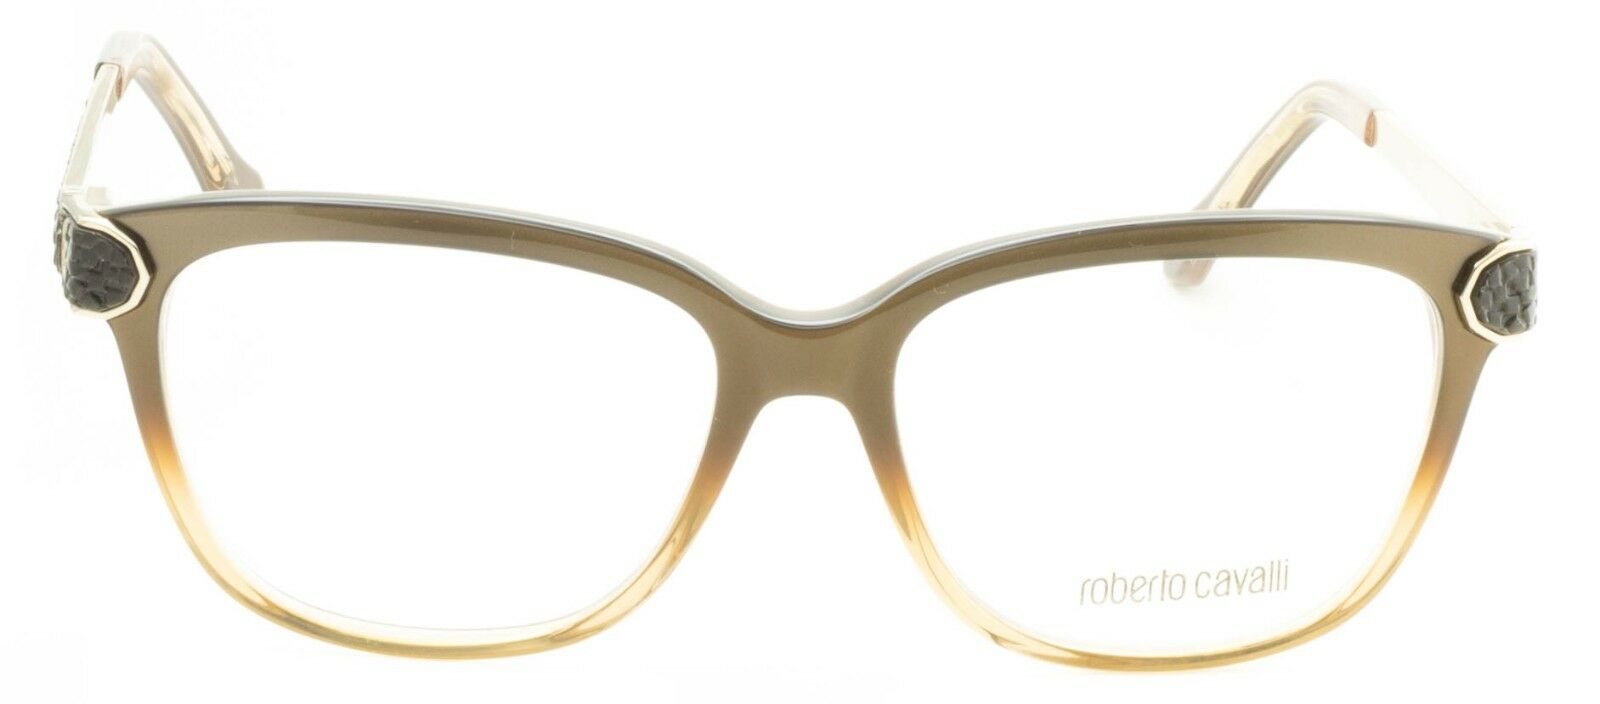 ROBERTO CAVALLI Polaris 934 050 RX Optical FRAMES NEW Glasses Eyewear Italy-BNIB